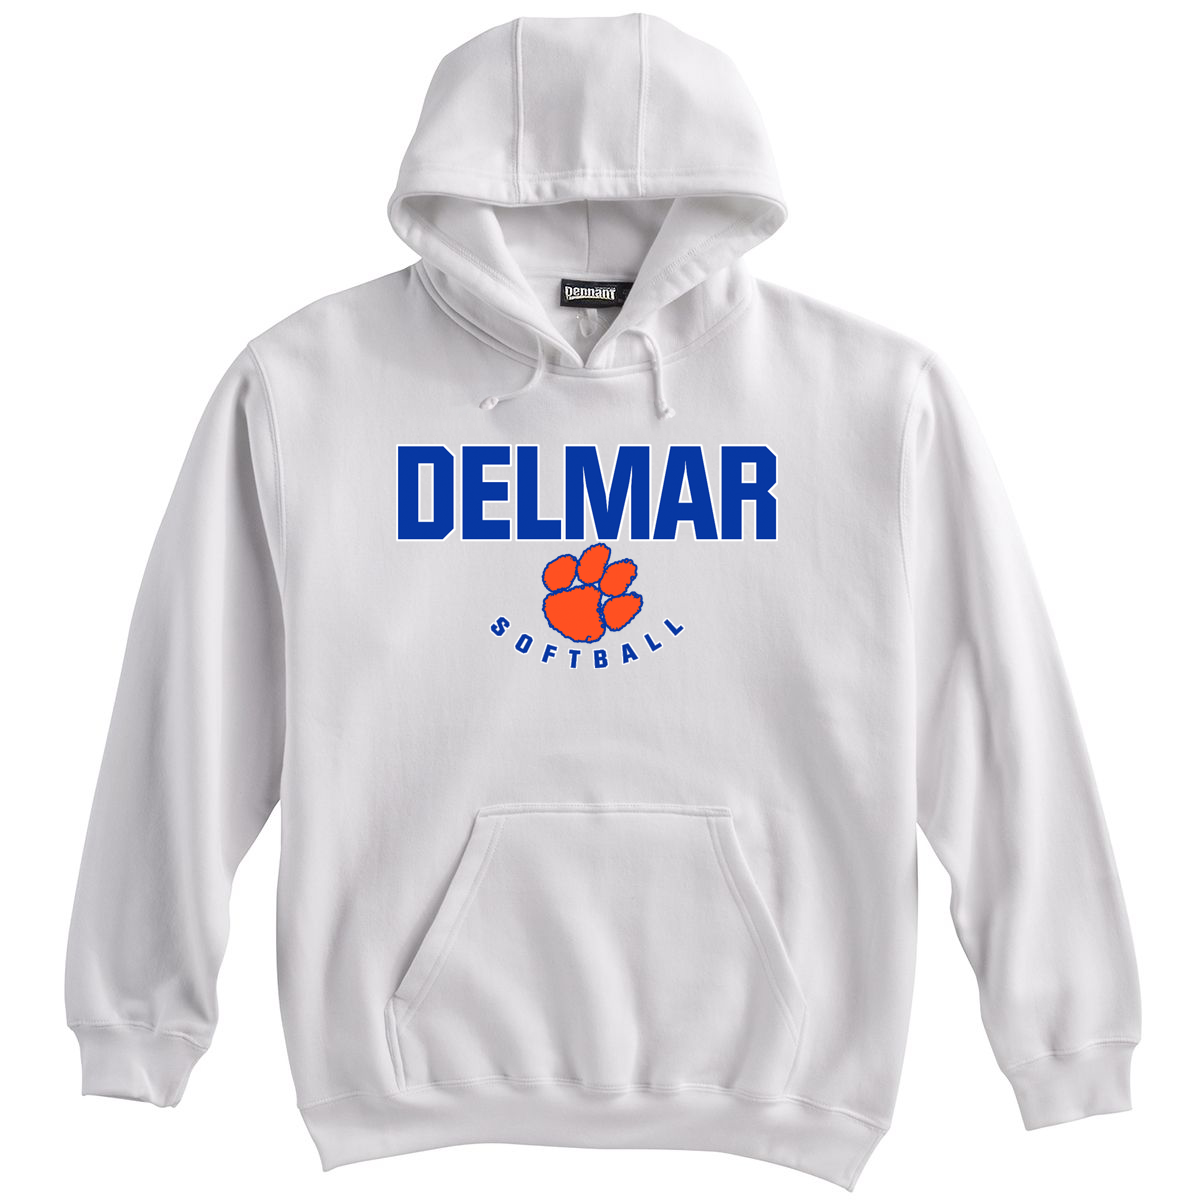 Delmar Softball Sweatshirt